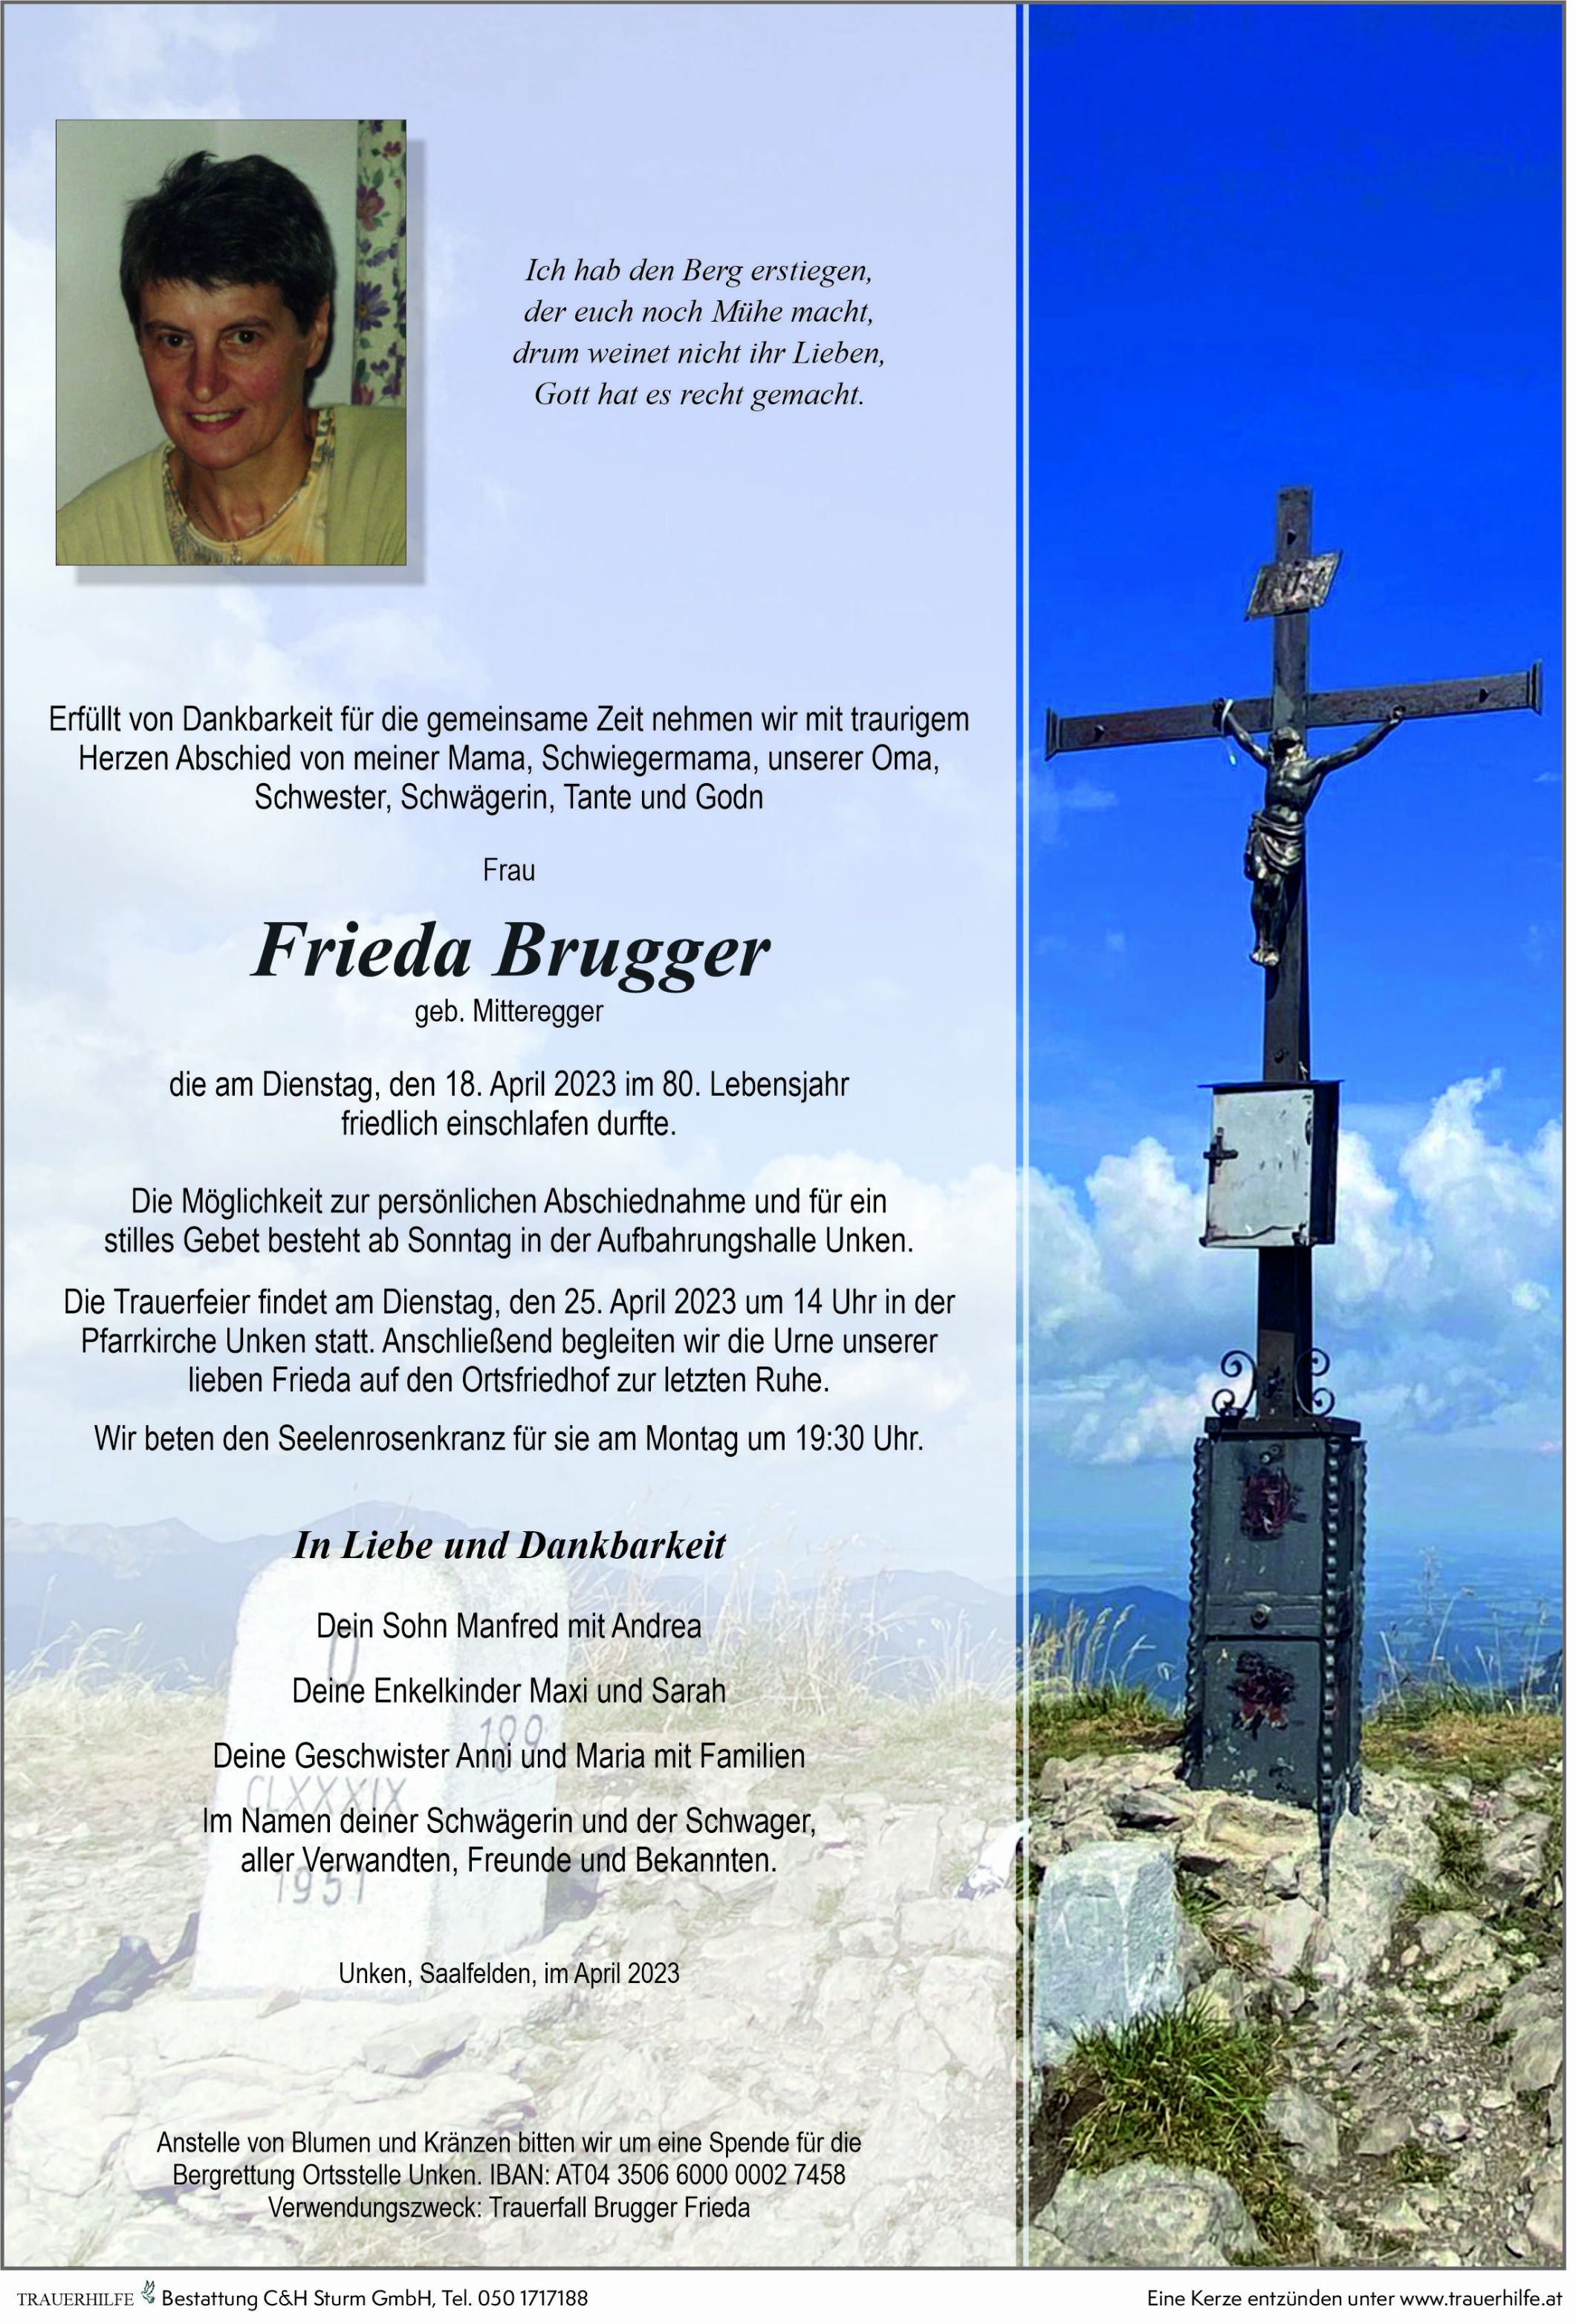 Frieda Brugger